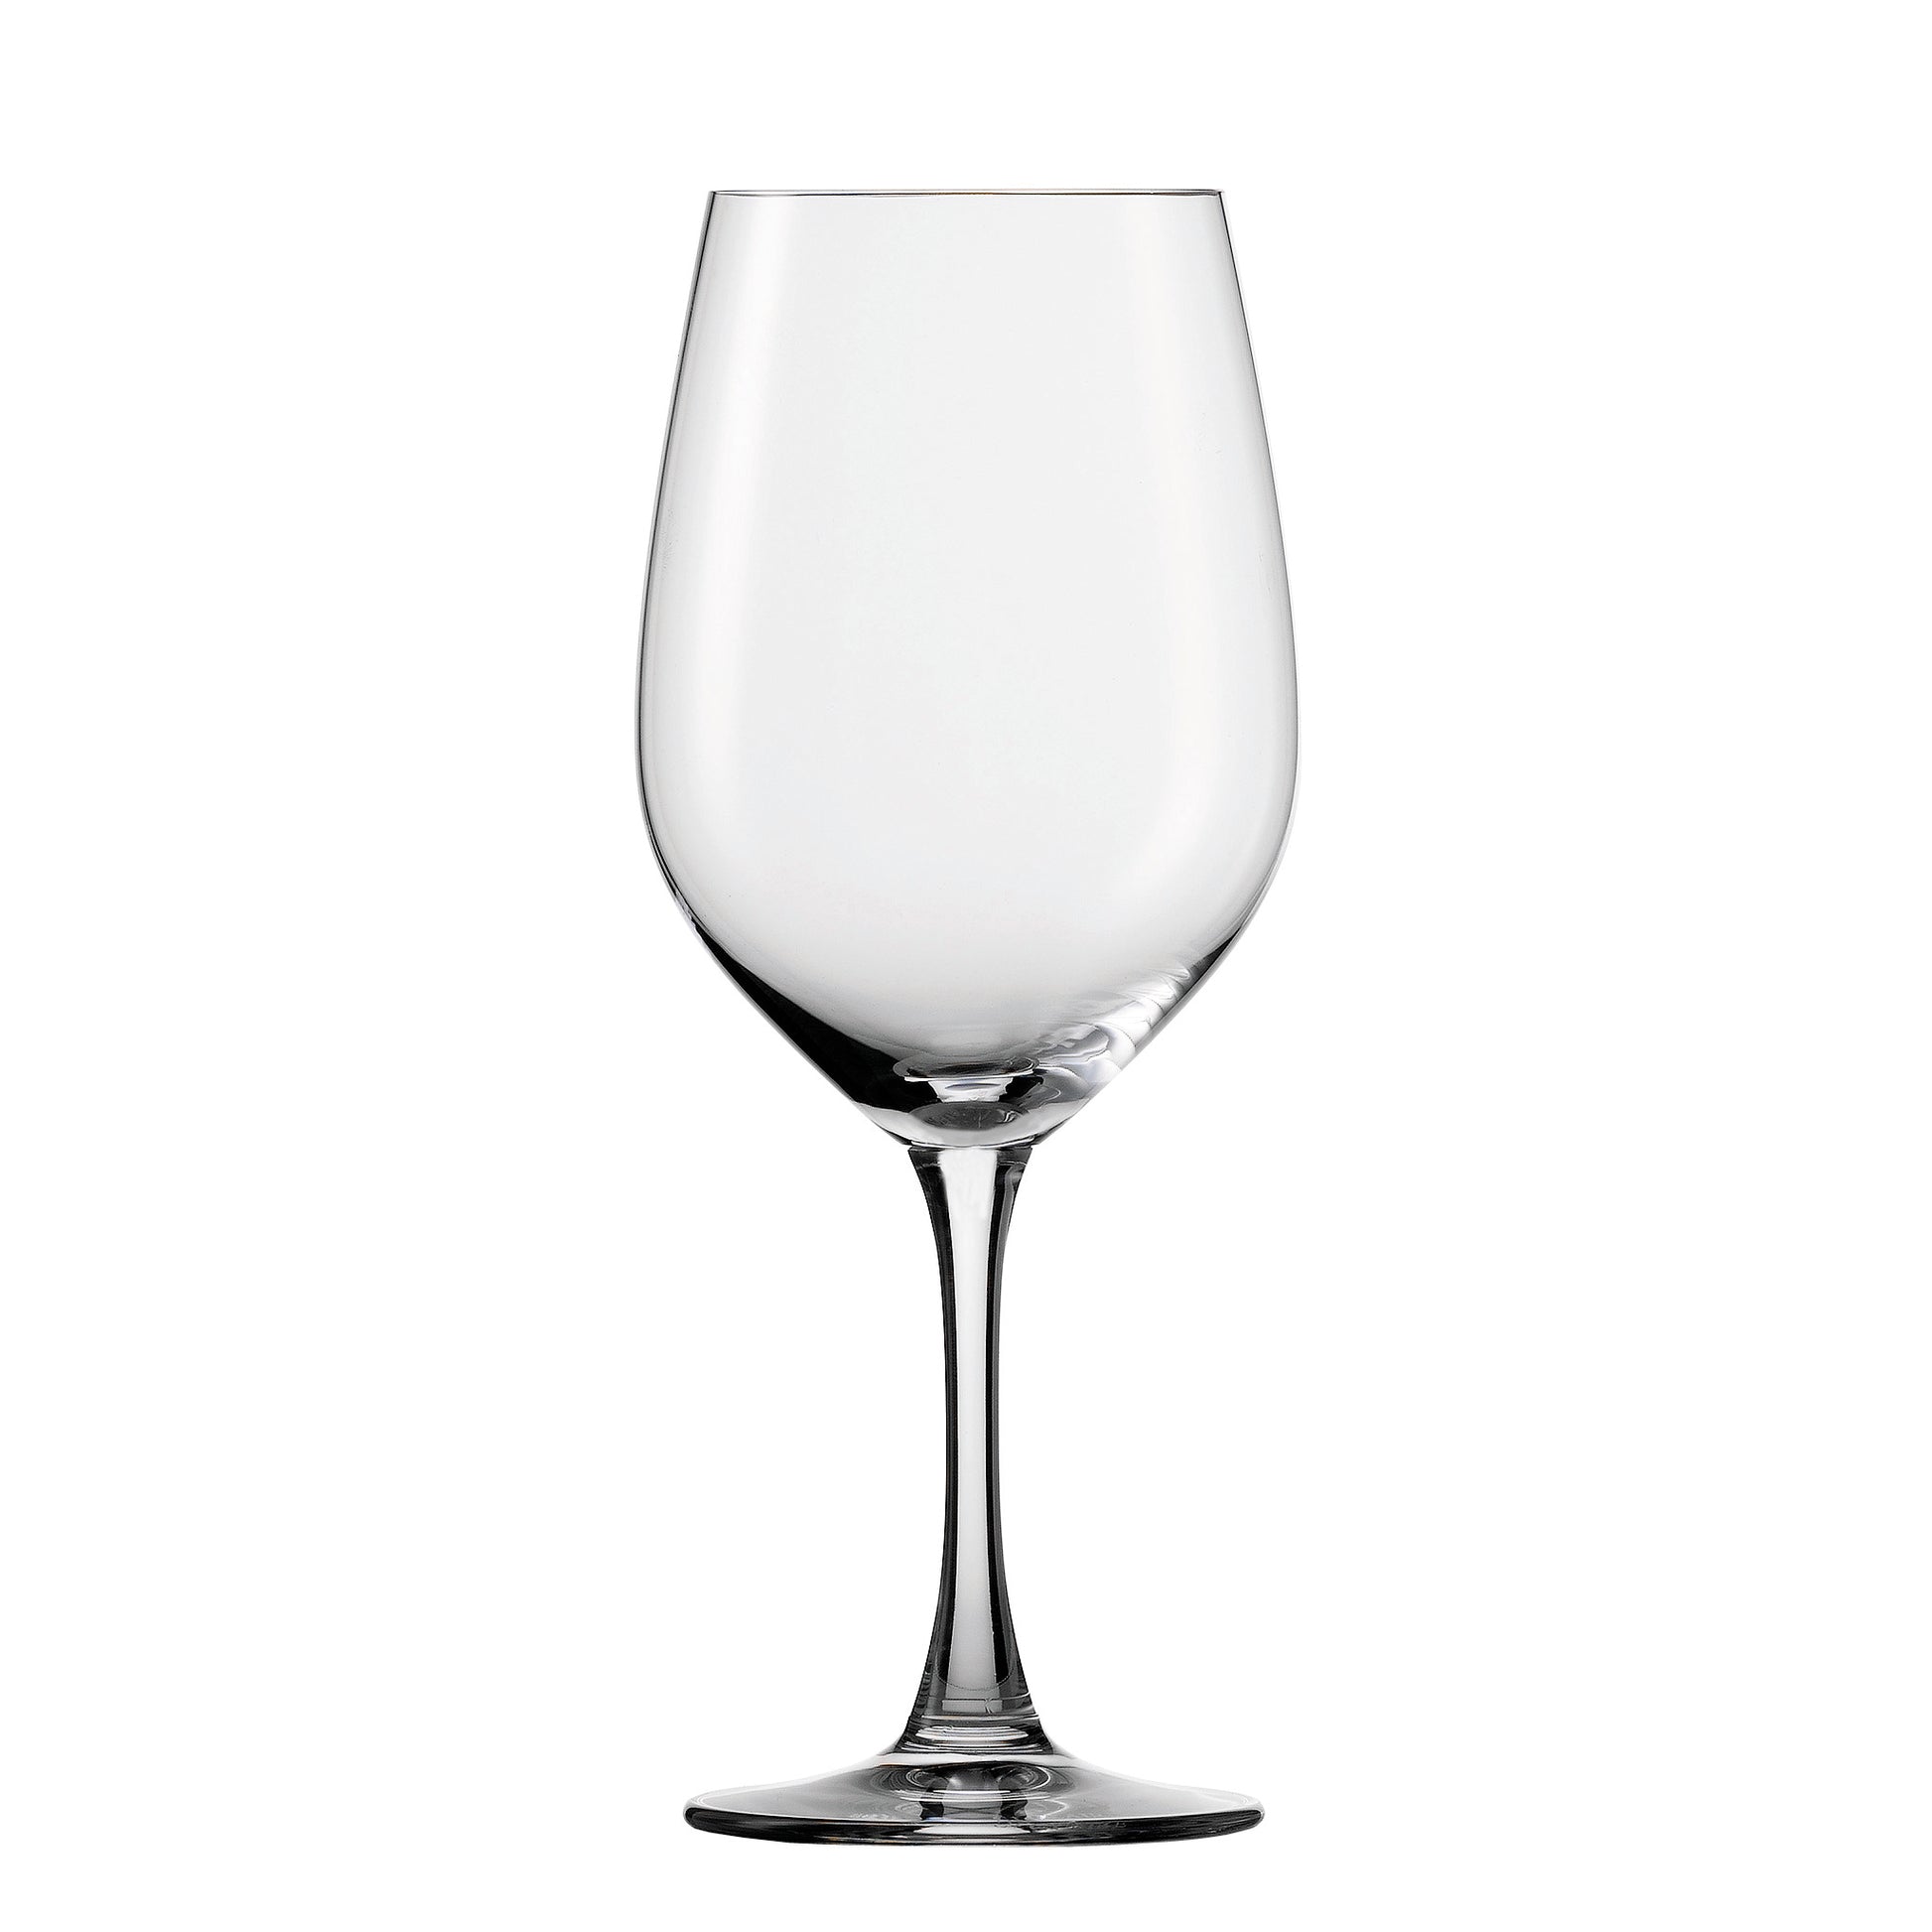 Spiegelau Prosecco Wine Glasses Set Of 4 - Crystal, Classic